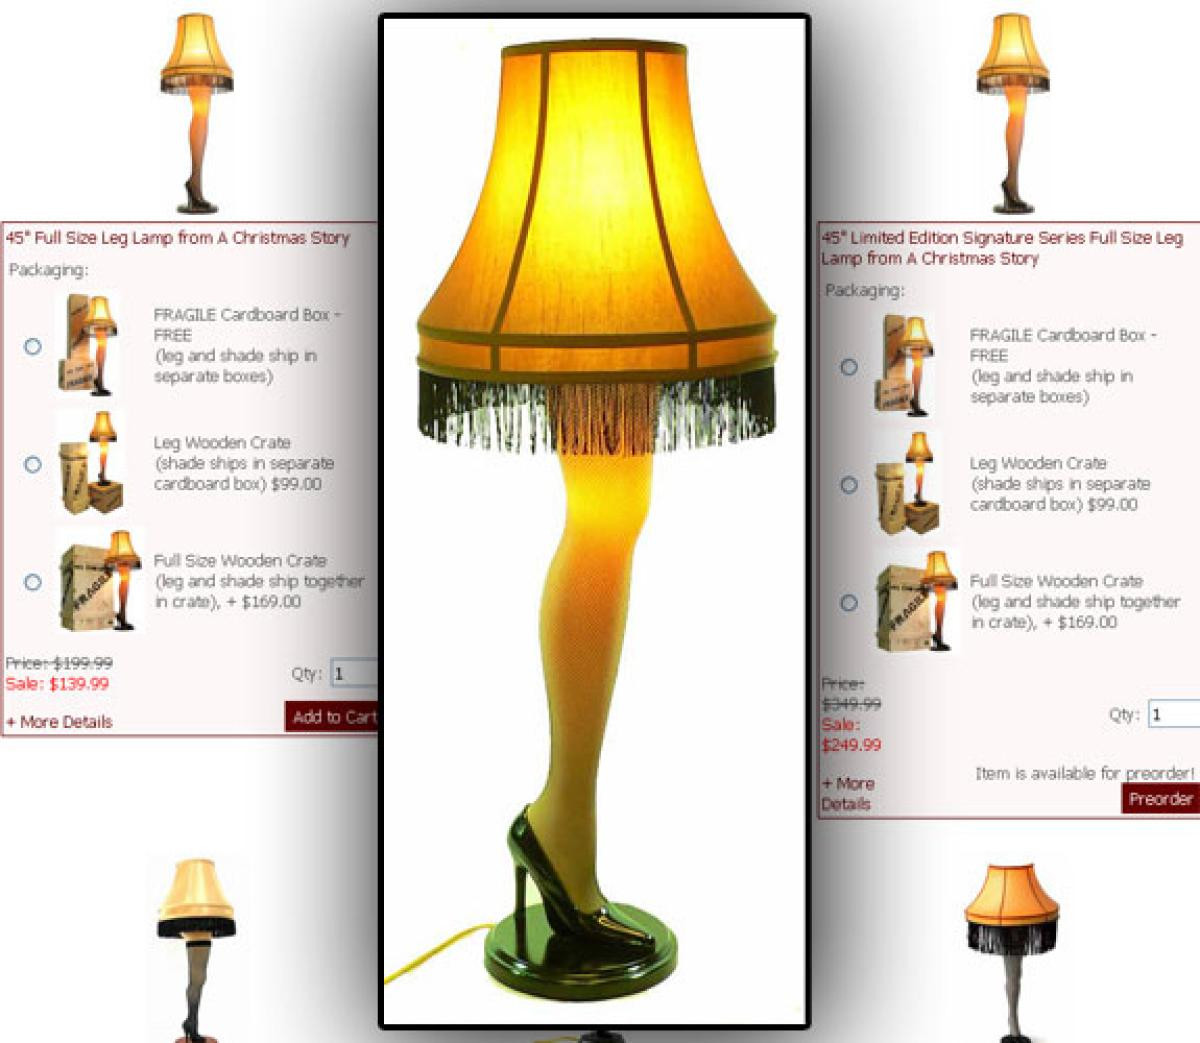 Christmas Story Leg Lamp Sale
 Leg lamp s A Christmas Story WATN NY Daily News